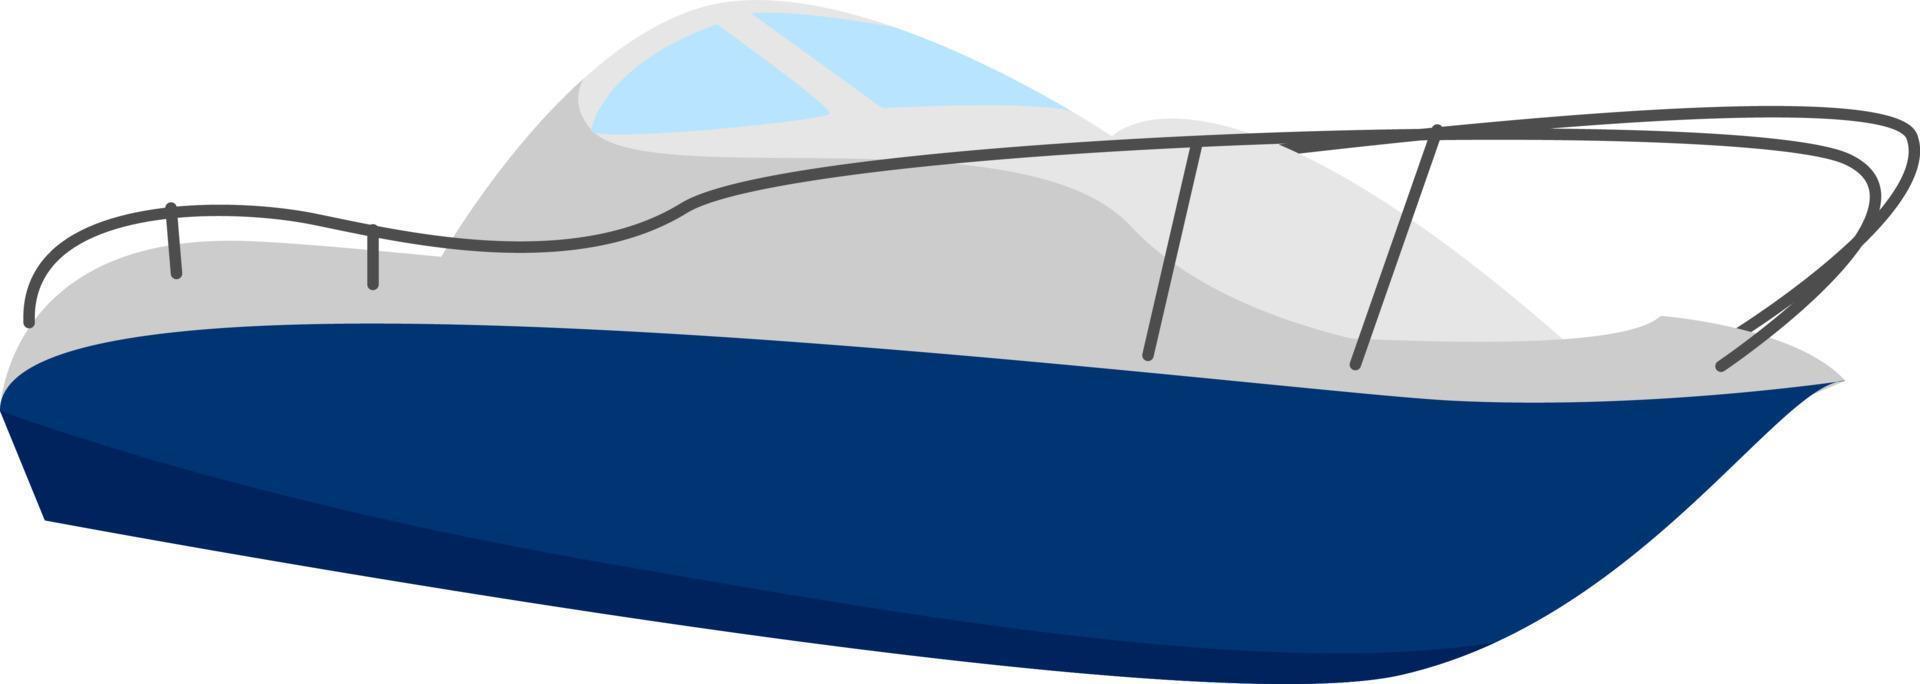 Fast boat, illustration, vector on white background.